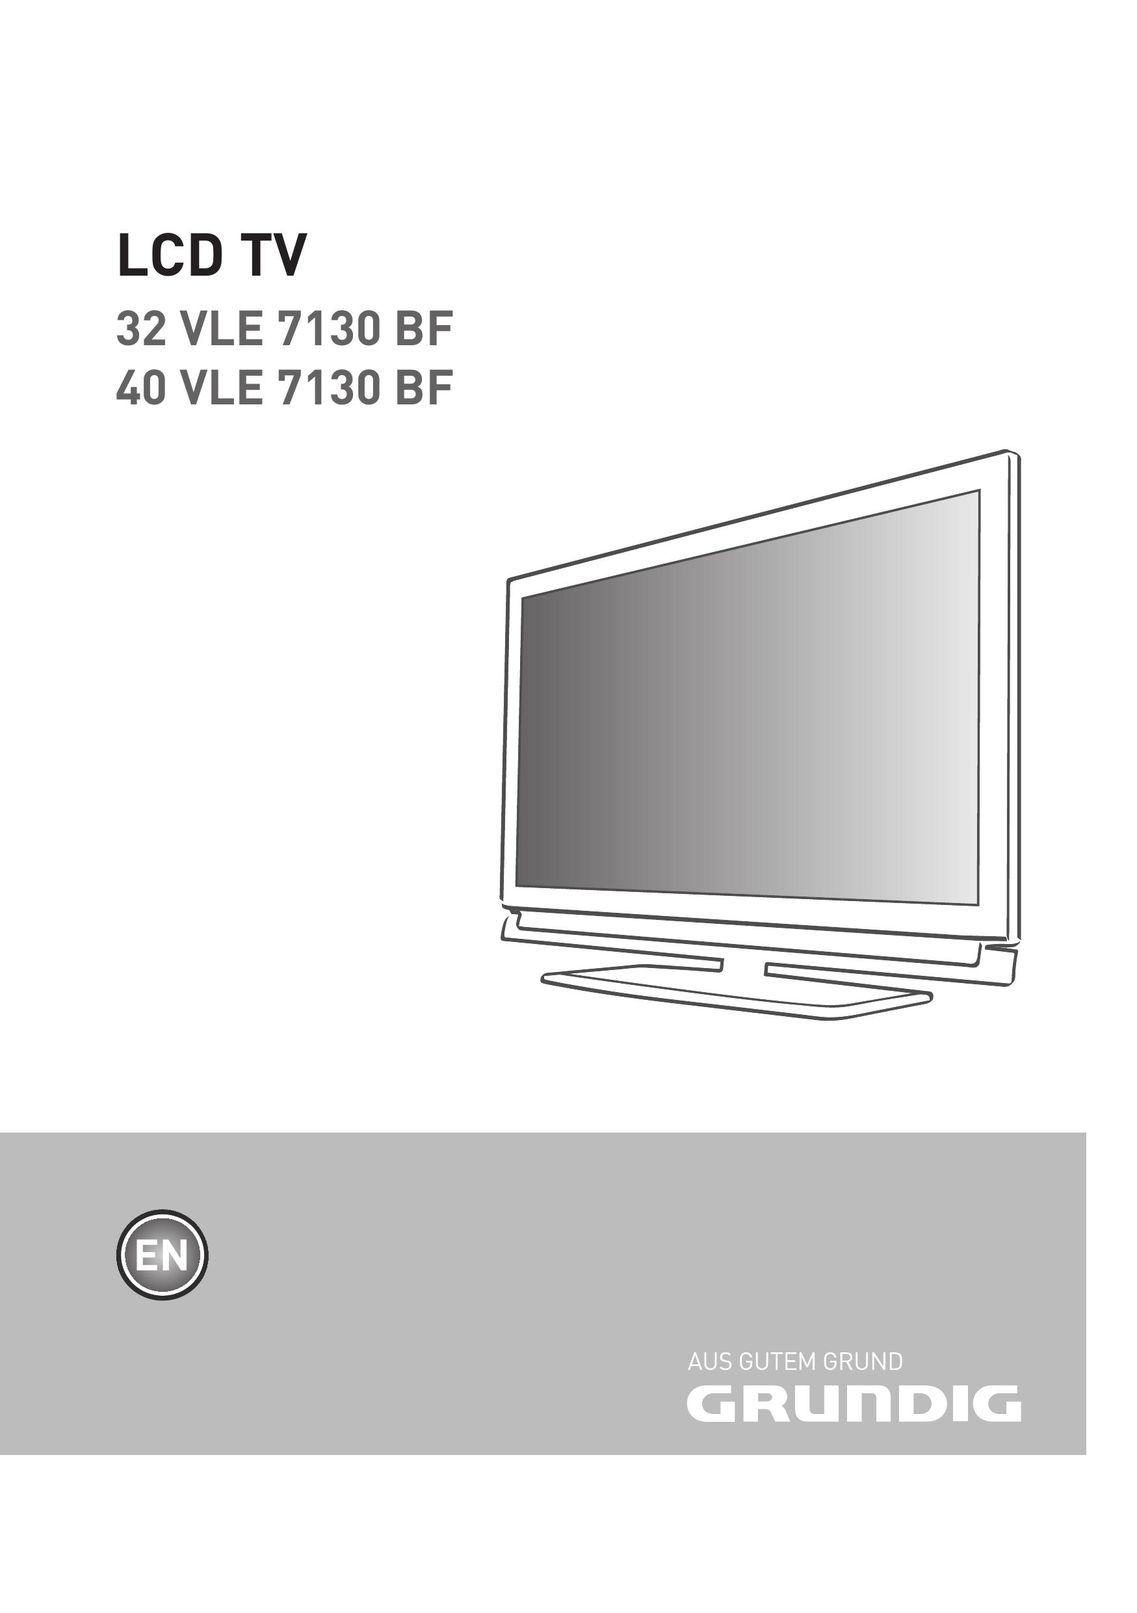 Grundig 40 VLE 7130 BF Flat Panel Television User Manual